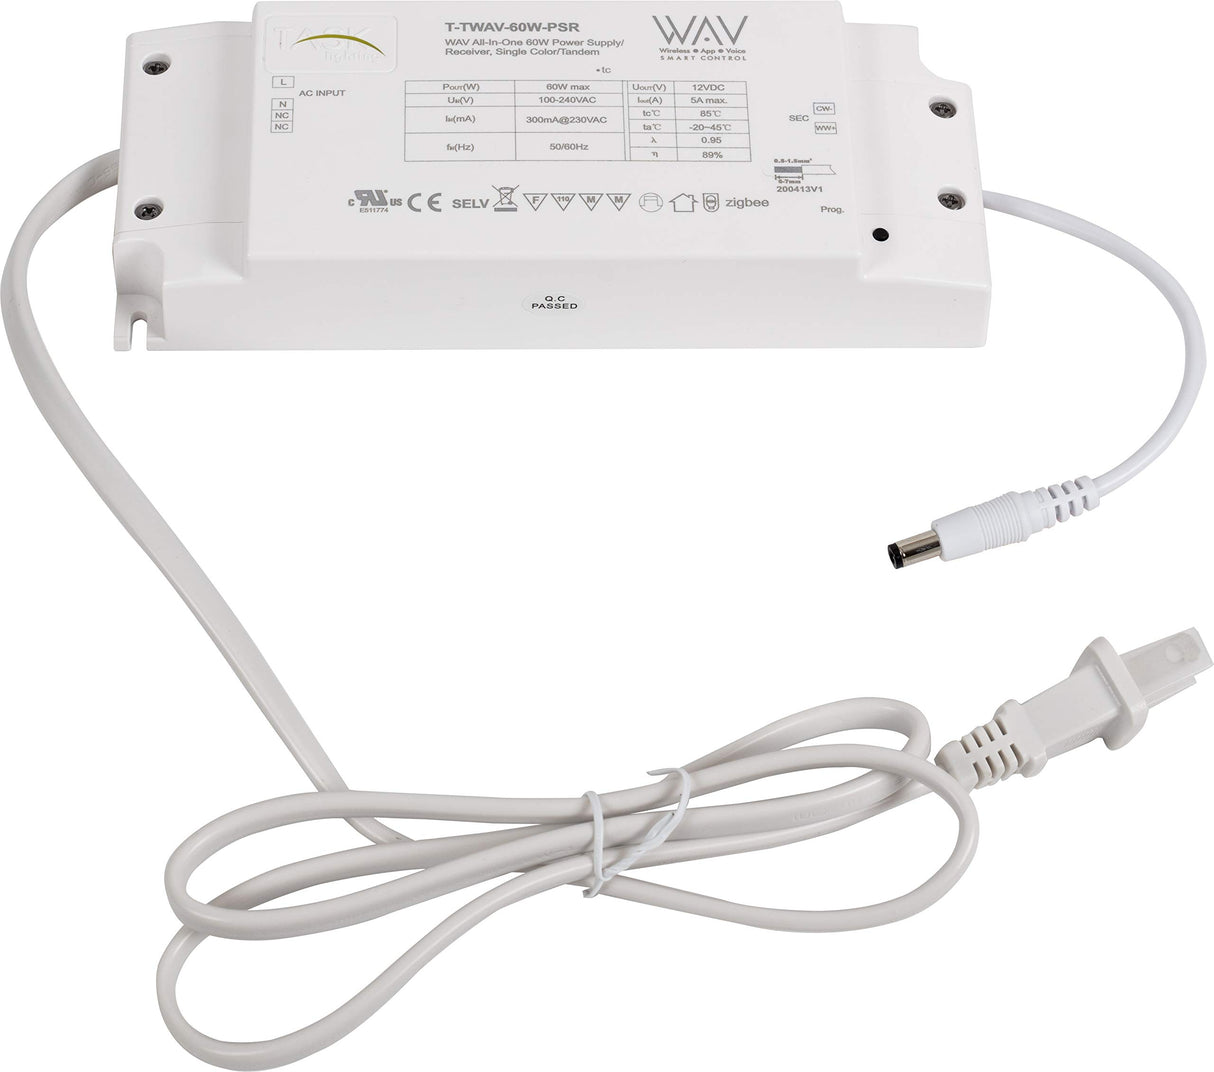 Task Lighting T-TWAV-60W-PSR WAV 60W Single Color/Tunable White Smart Receiver/Power Supply, Zigbee Technology